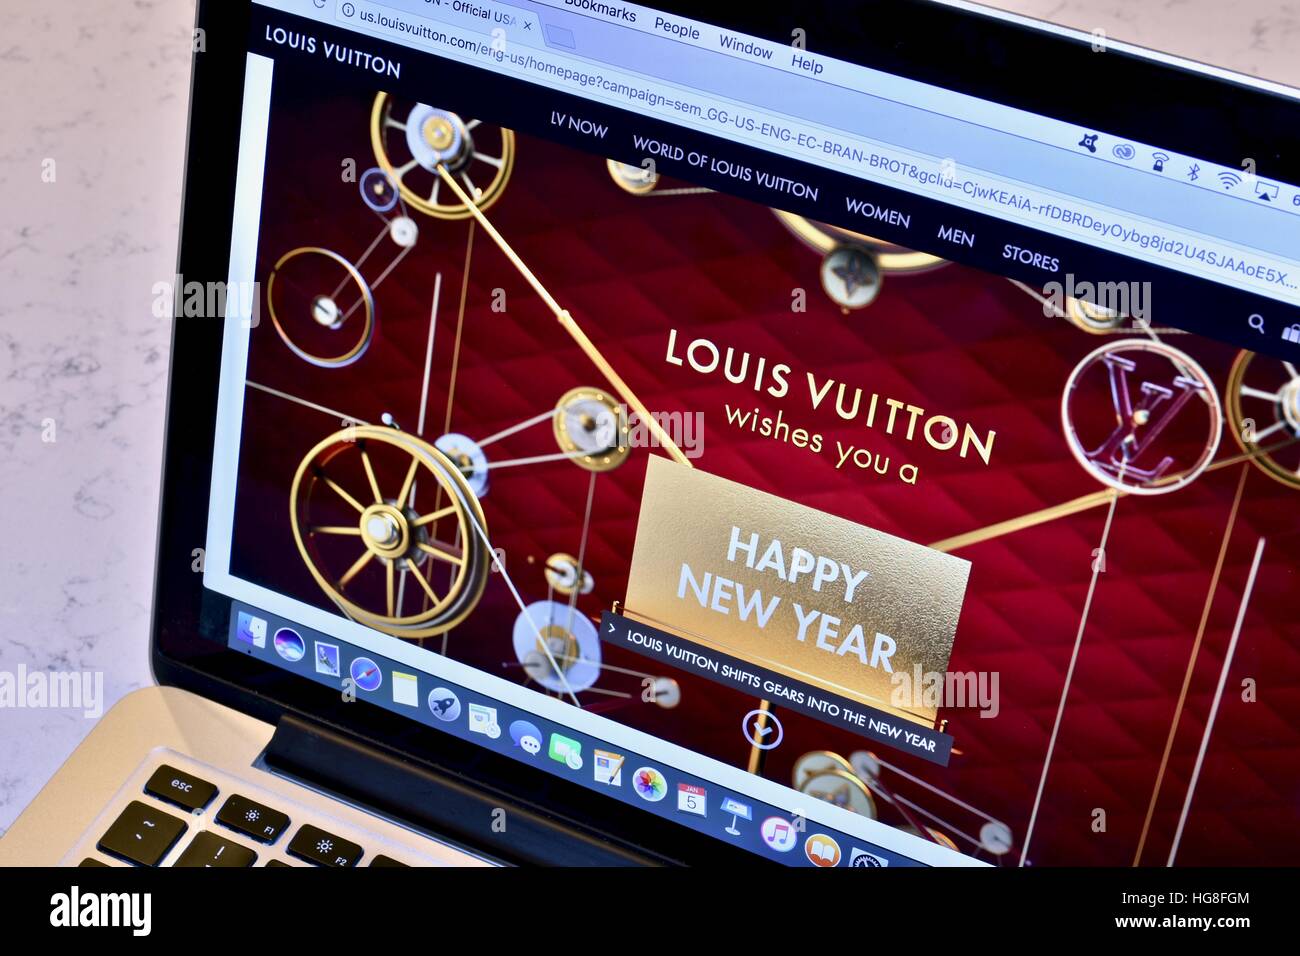 The Louis Vuitton website on an Apple Macbook Pro Stock Photo Alamy